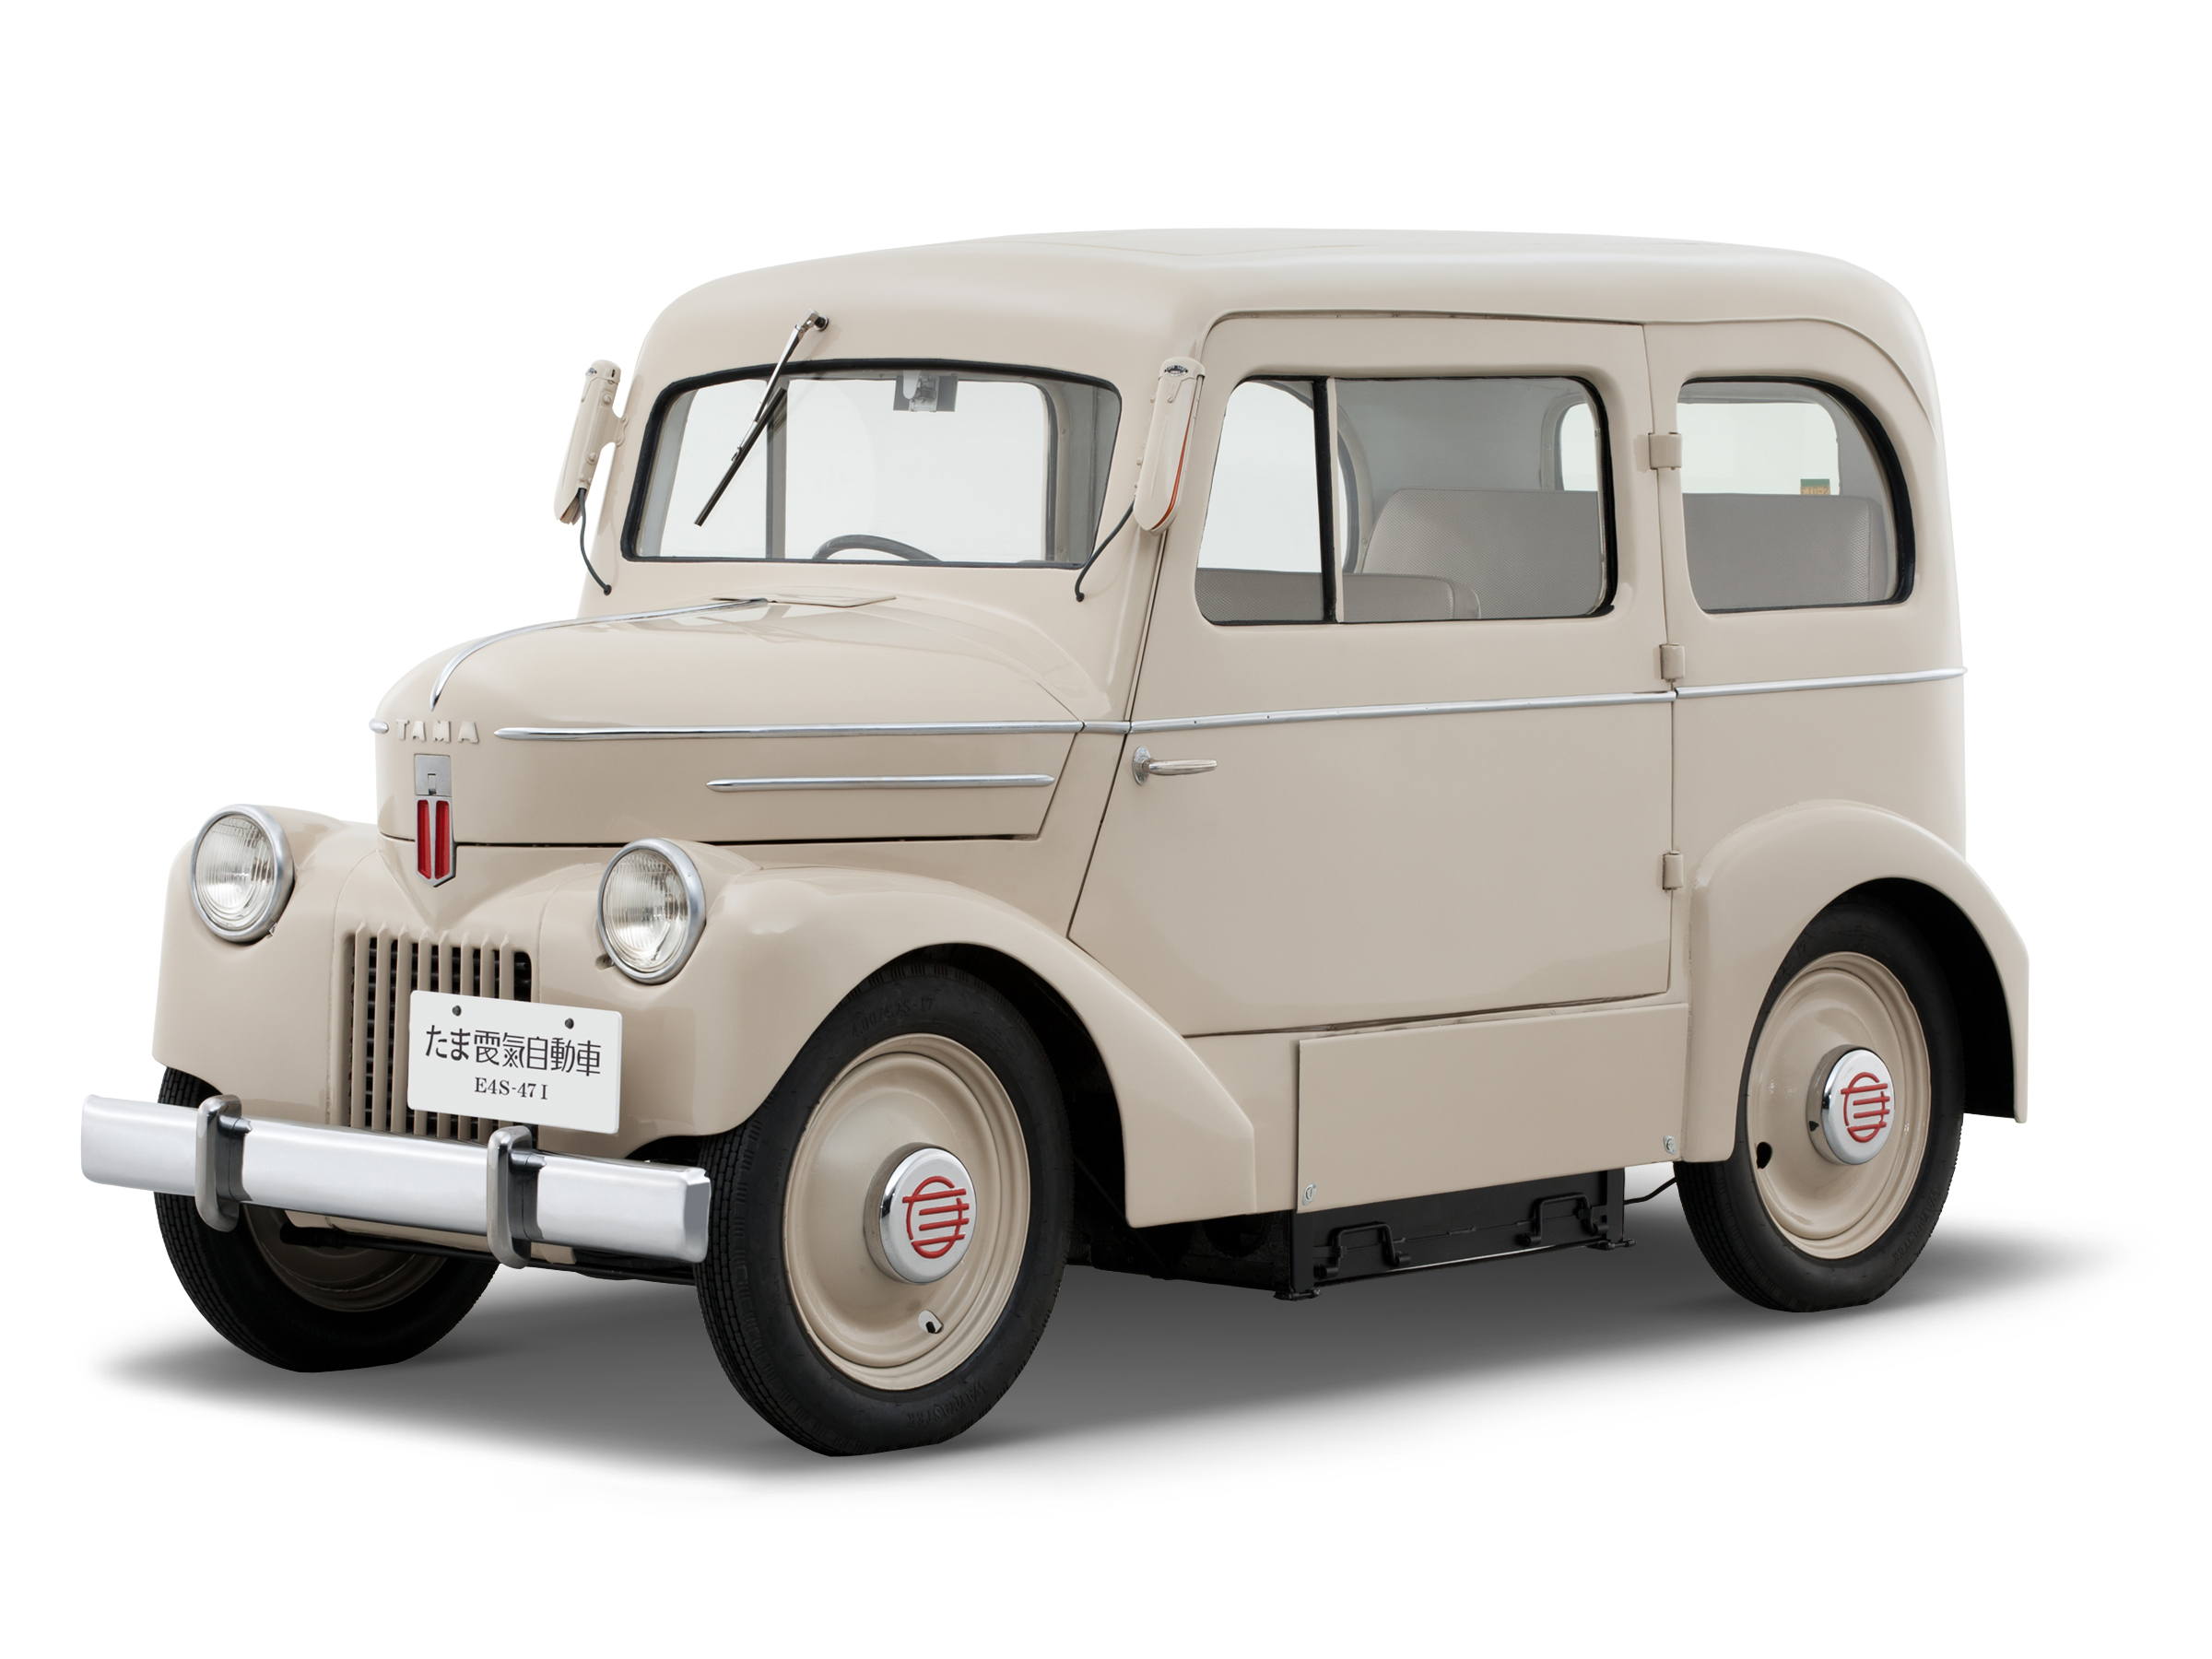 Vehicul electric cu autonomie de 96 km inventat in Japonia 1947